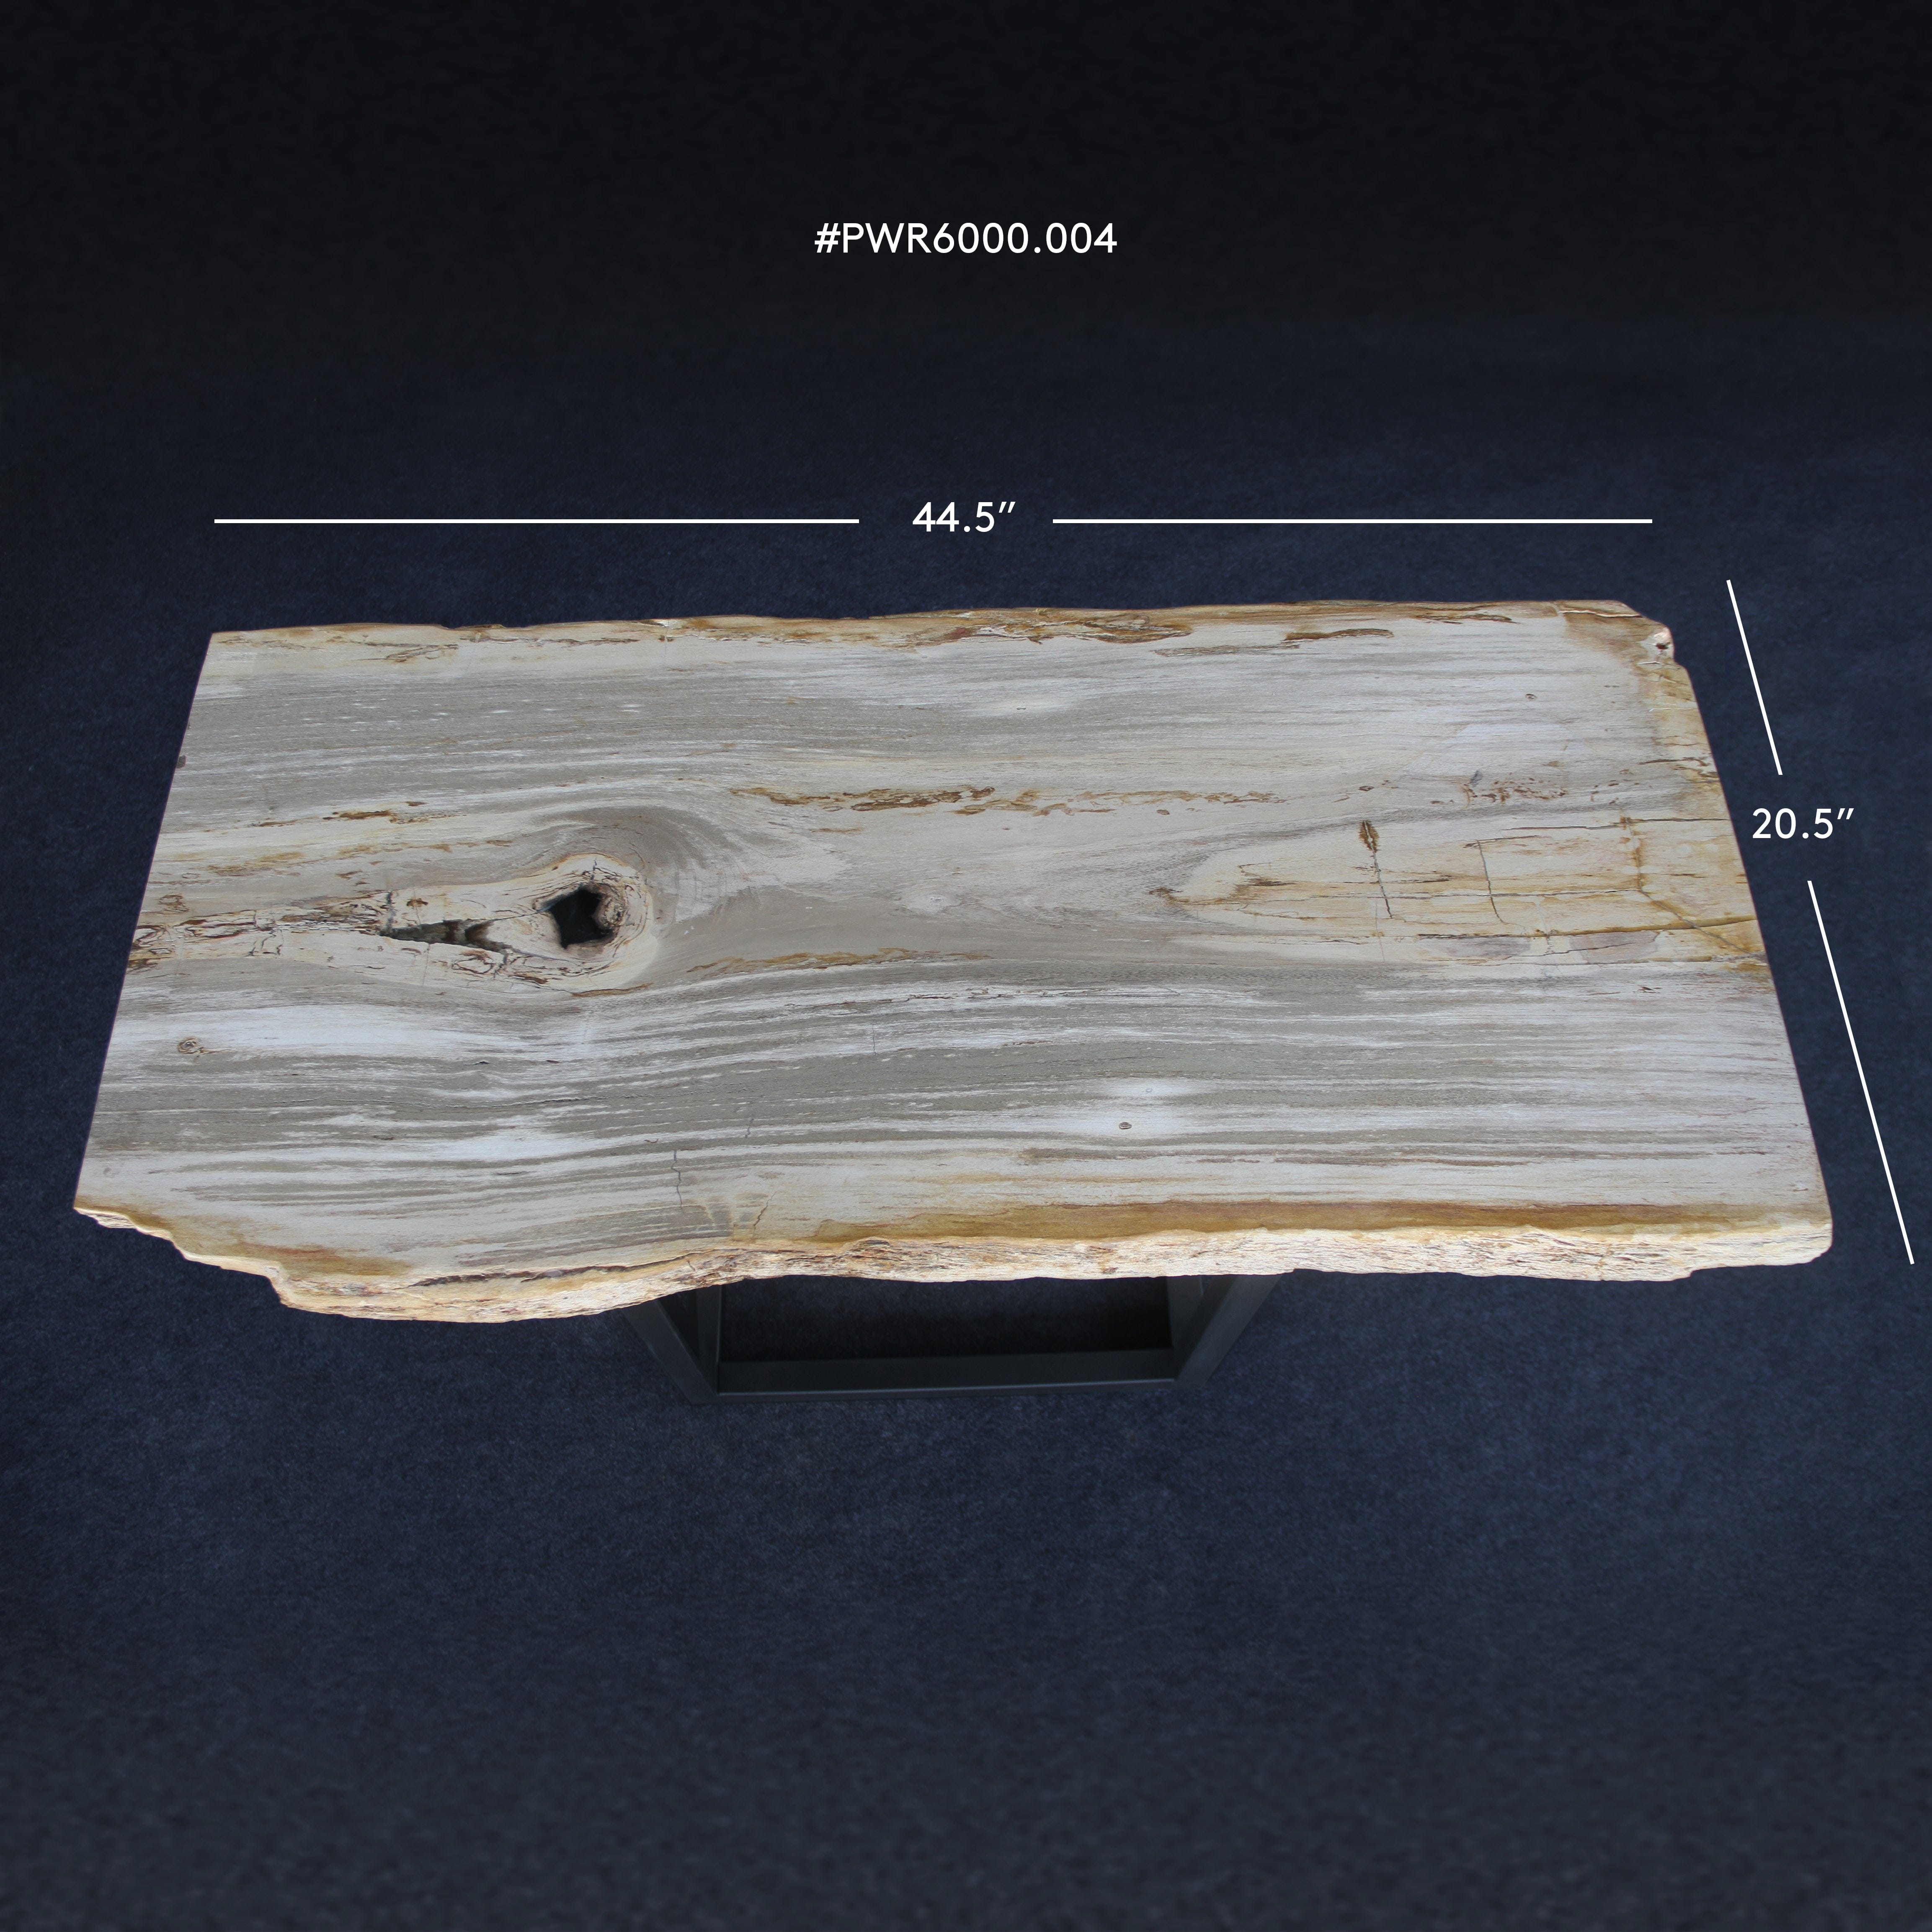 Kalifano Petrified Wood Petrified Wood Console Table 44" / 117 lbs PWR6000.004